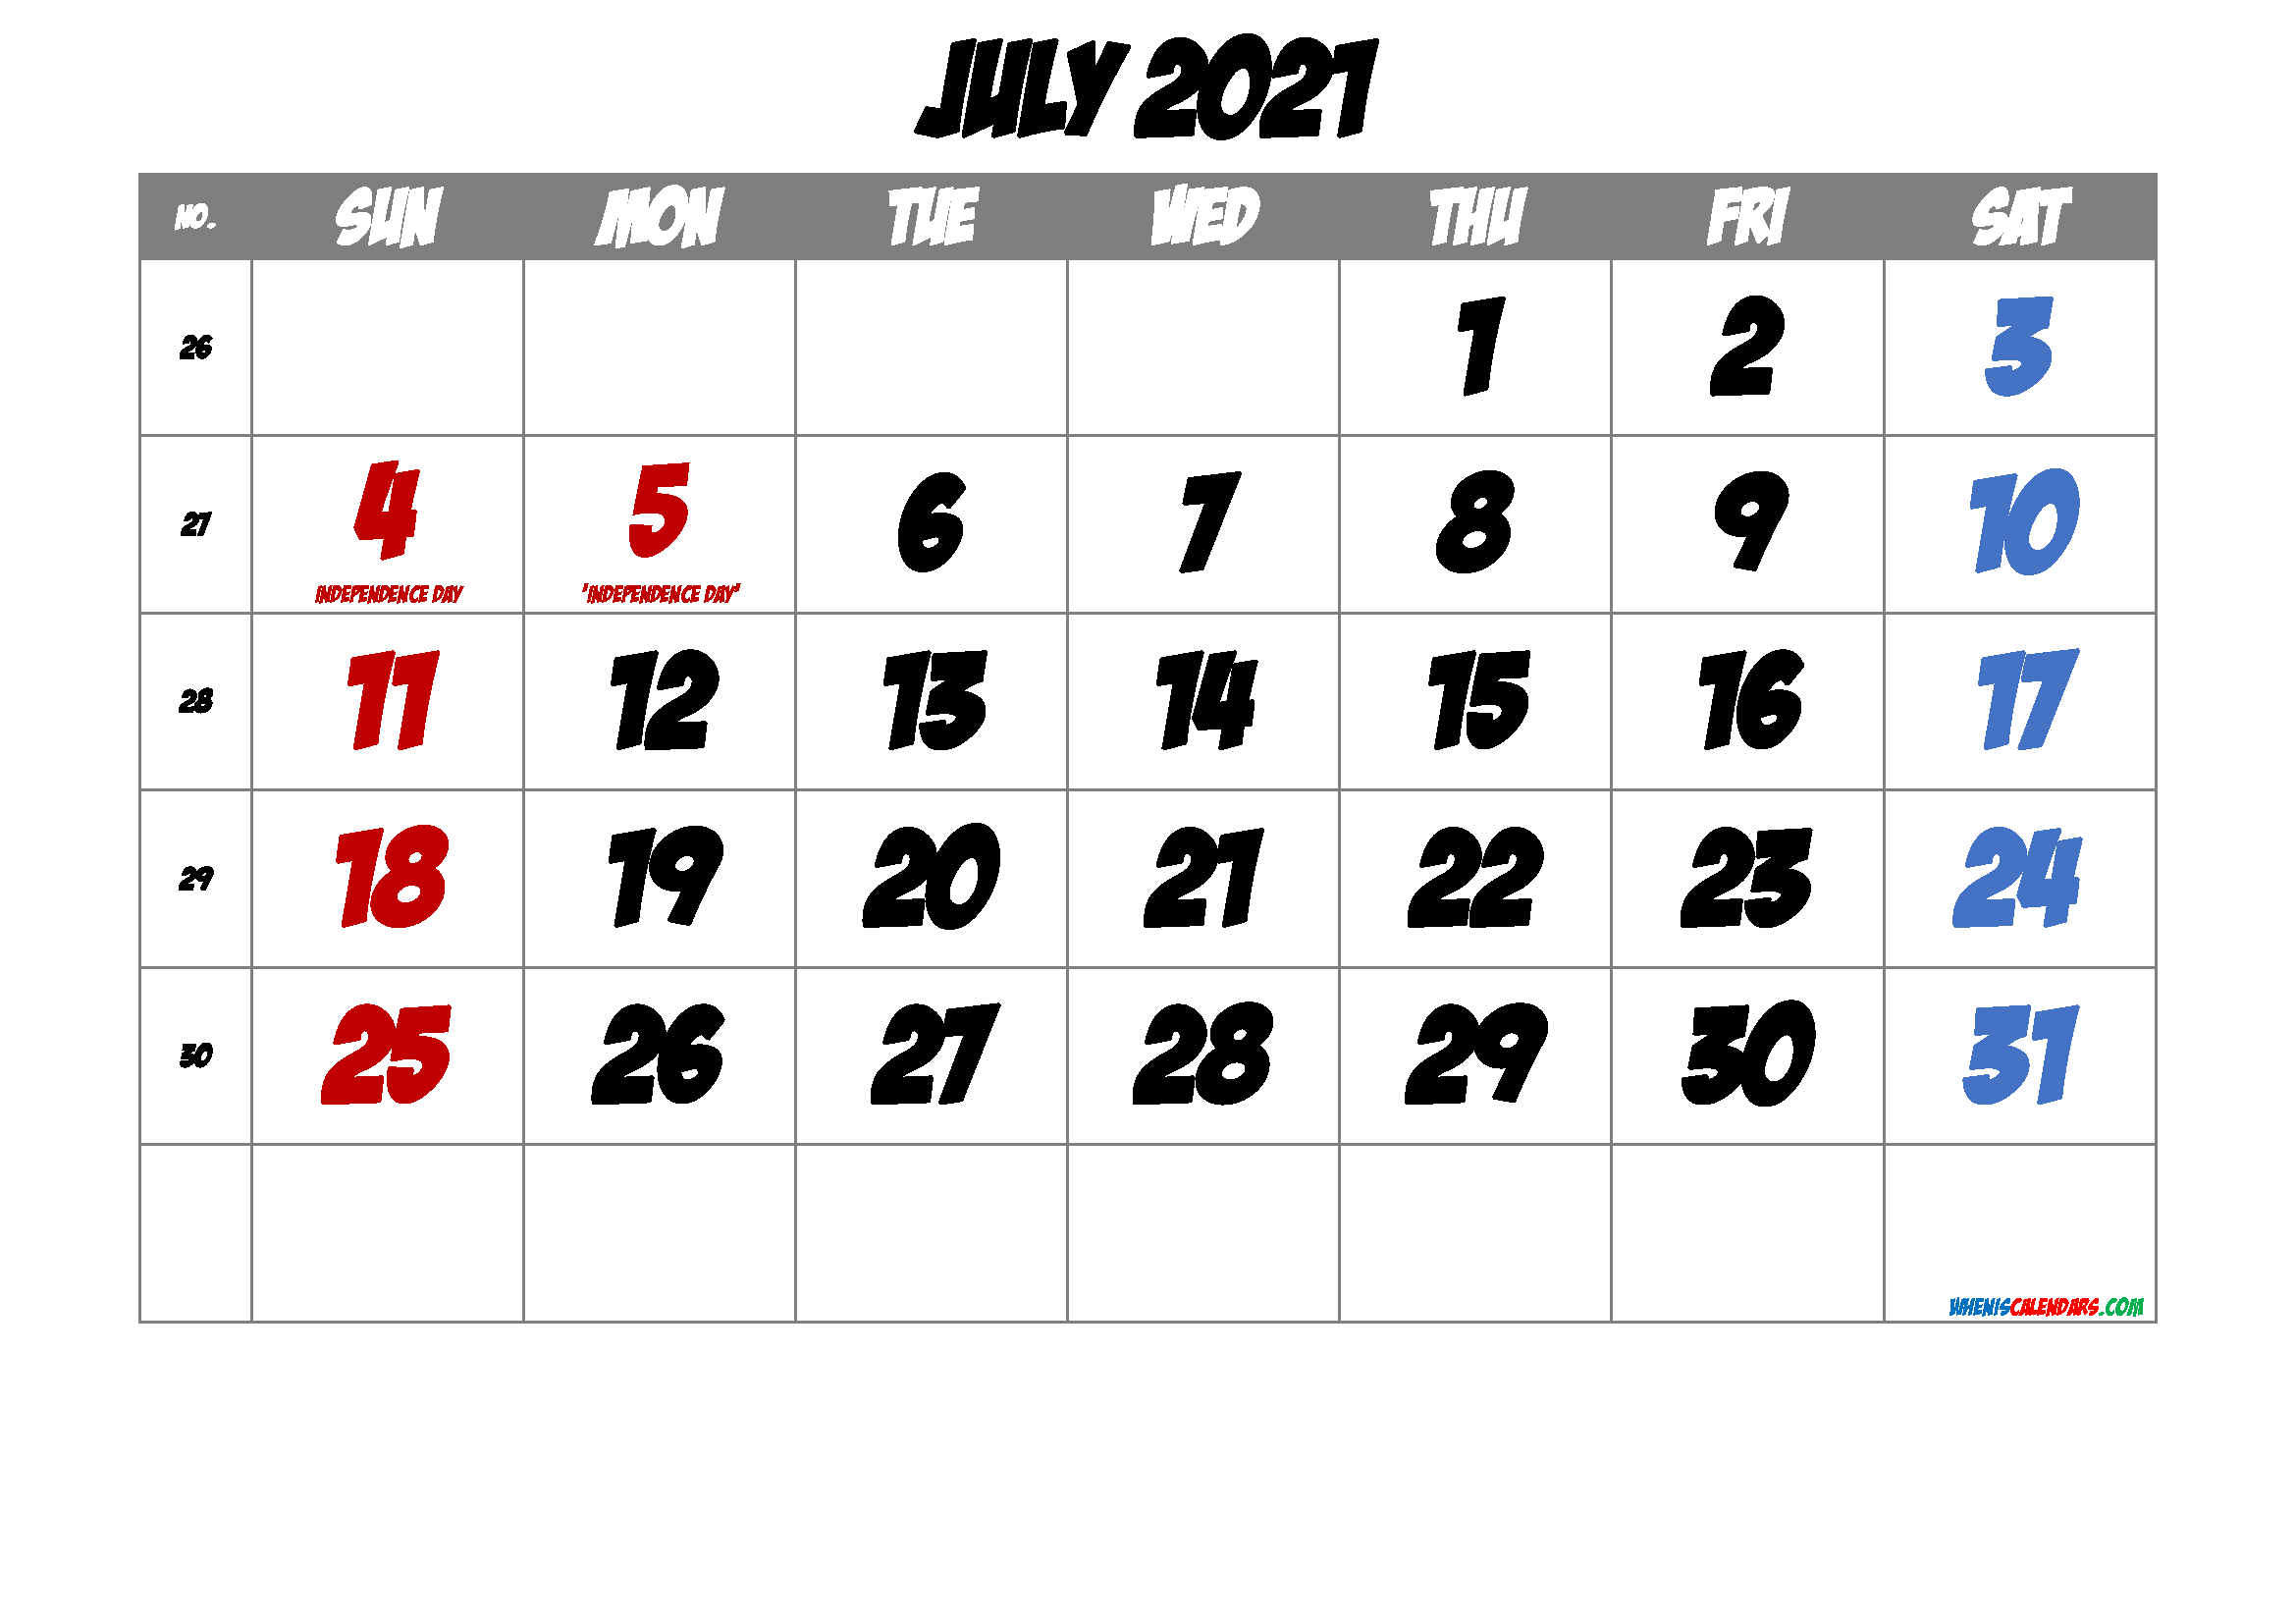 JULY 2021 Printable Calendar with Holidays